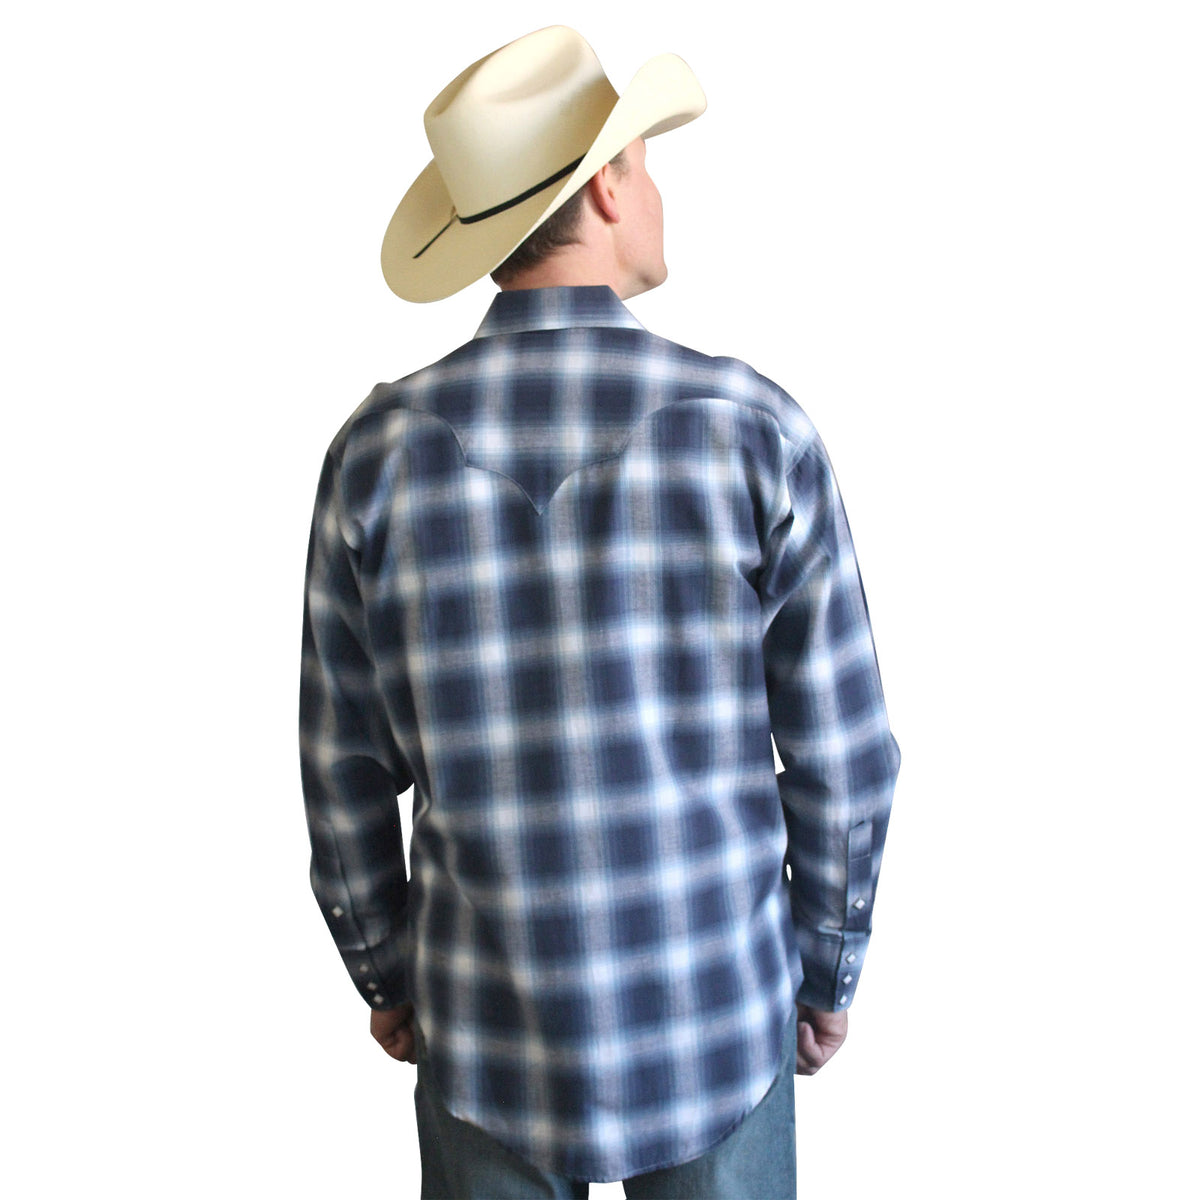 The SNEUM Sawtooth Western shirt 